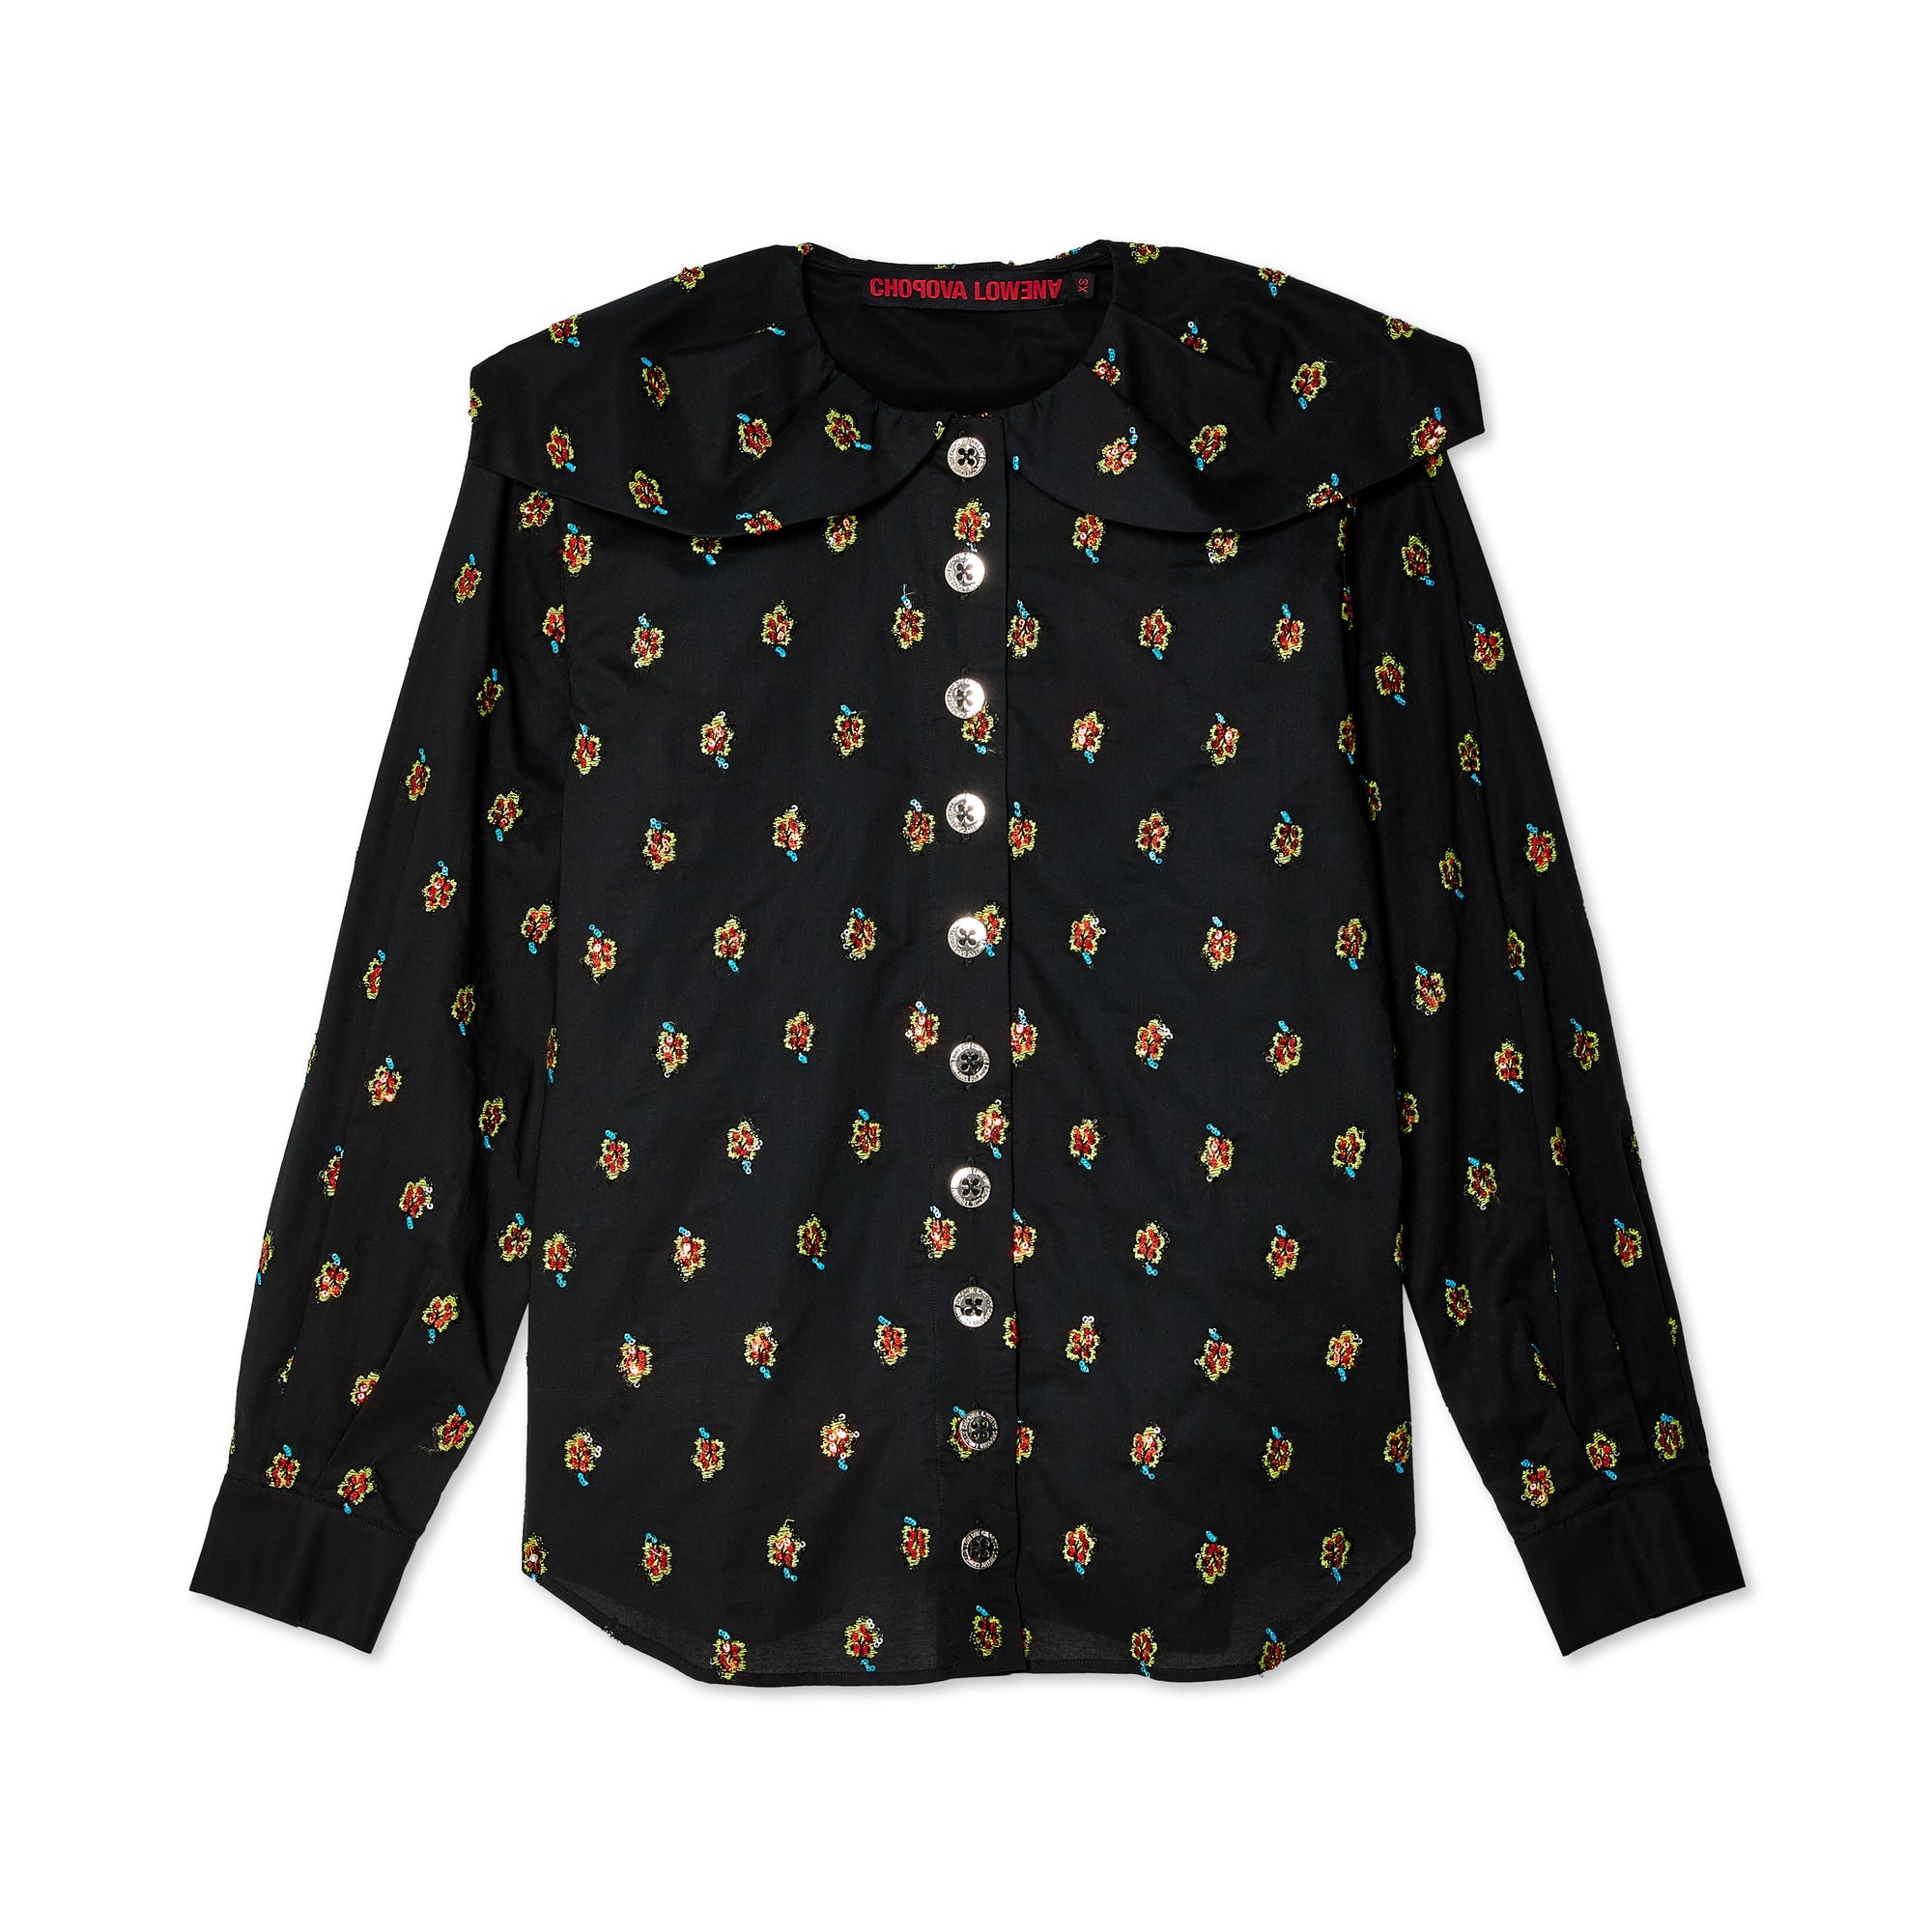 Chopova Lowena - Women's Corinthian Embroidered Shirt - (Black) view 1